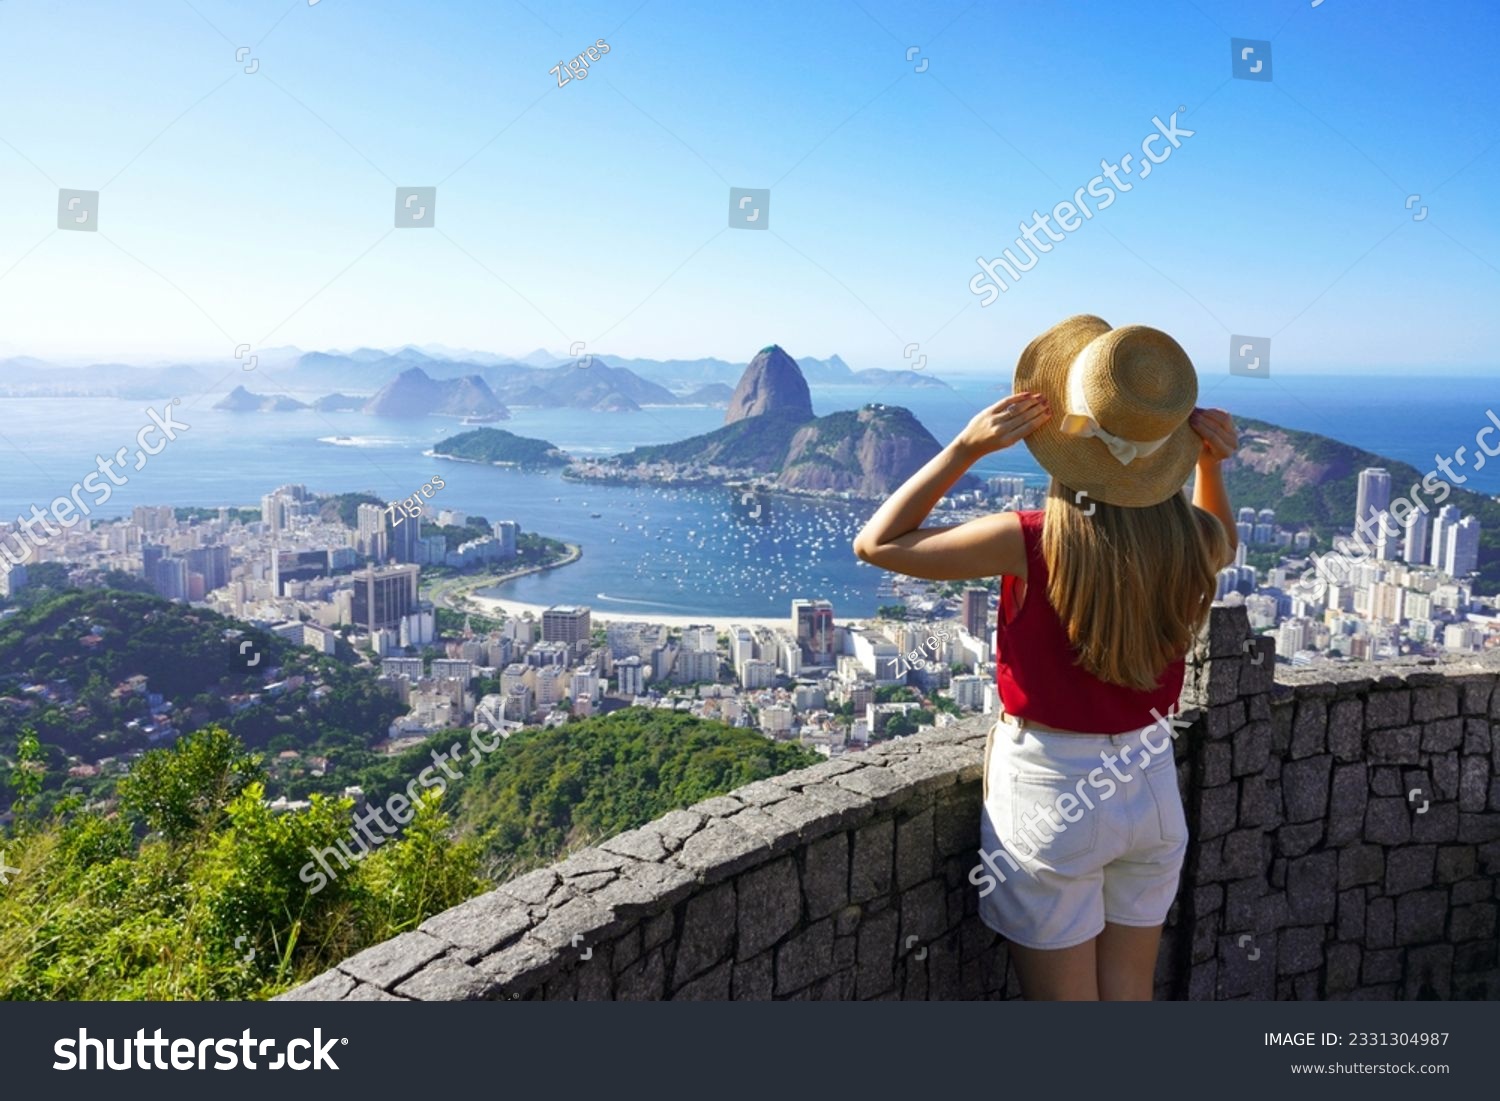 Holidays in Rio de Janeiro. Rear view of tourist woman enjoying sight of famous Guanabara Bay with Sugarloaf Mountain in Rio de Janeiro, UNESCO World Heritage, Brazil. #2331304987